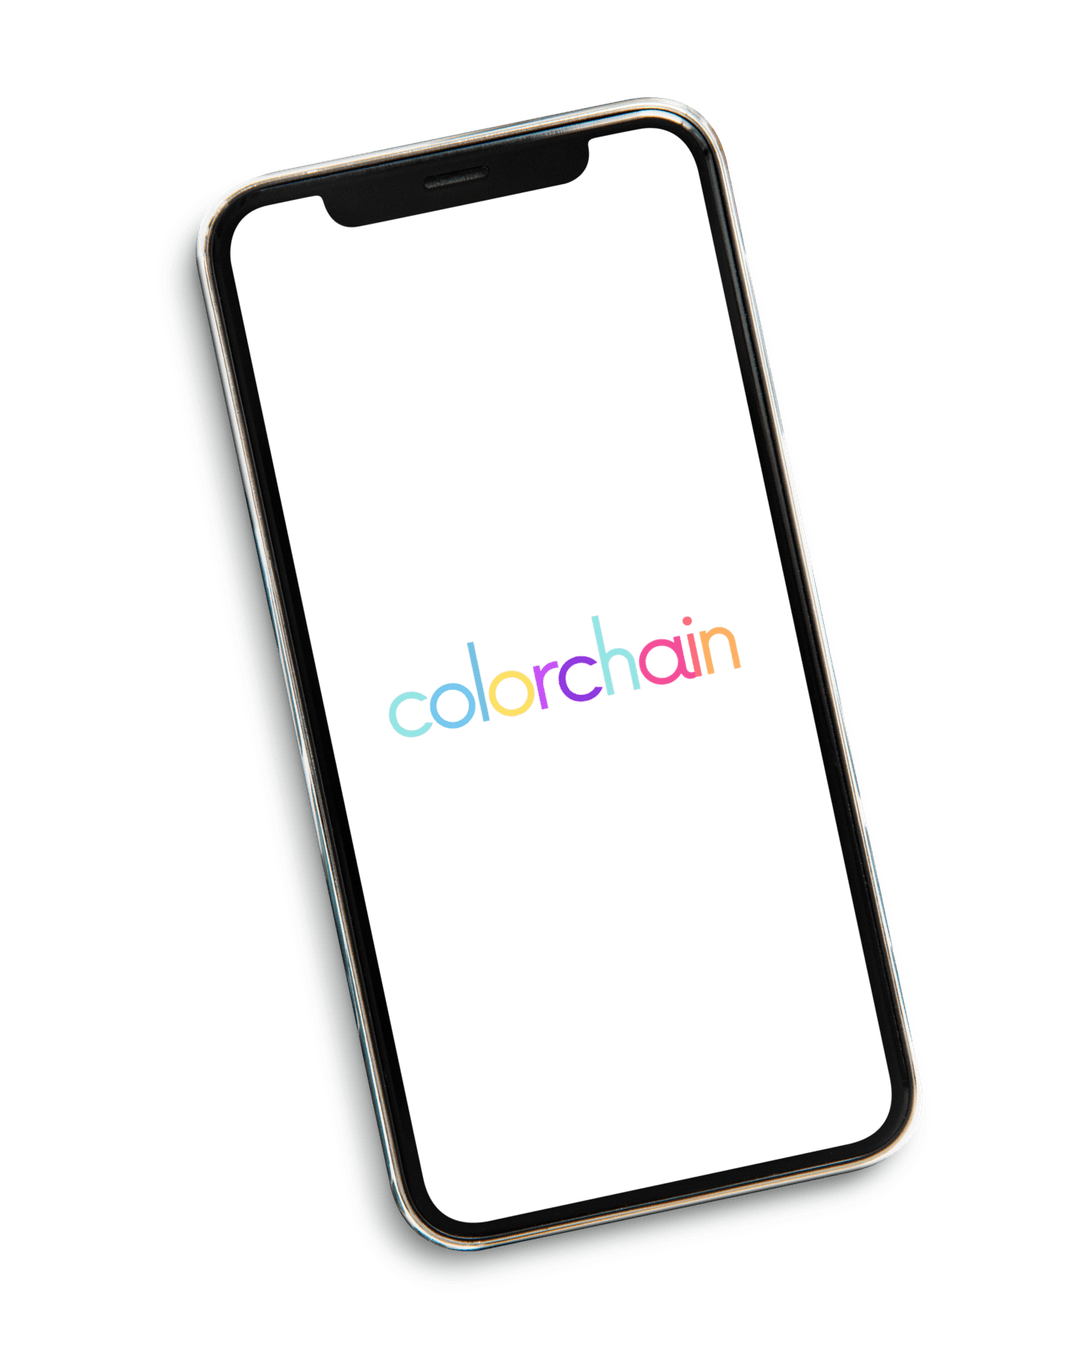 Color Chain - App